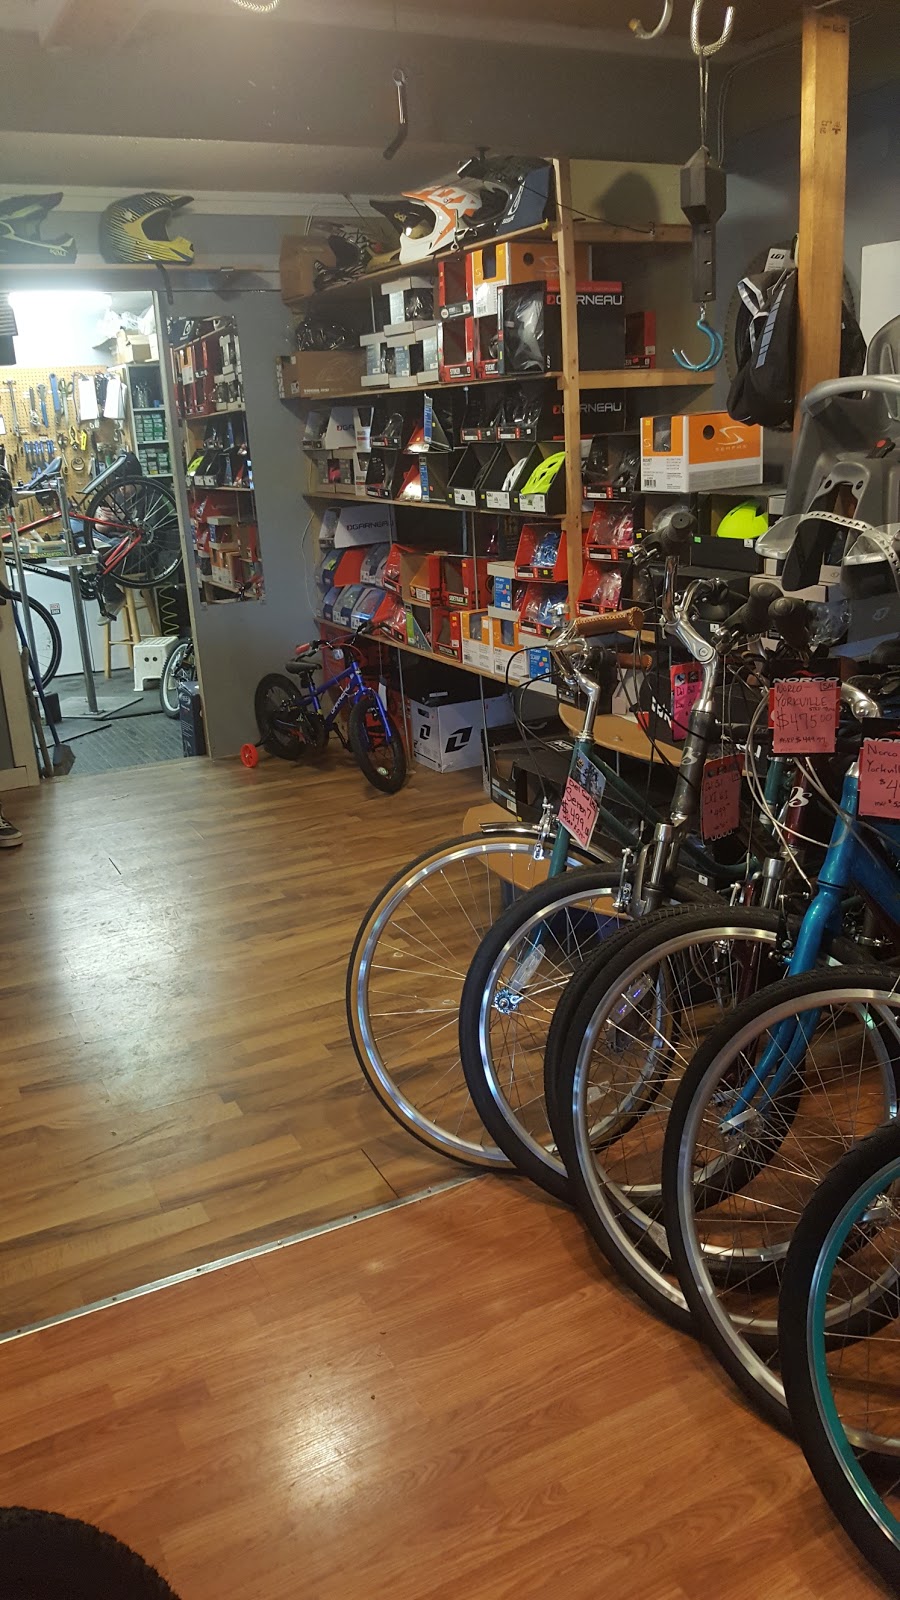 Crankys Bike Shop | 2961 272 St, Aldergrove, BC V4W 3R3, Canada | Phone: (604) 856-1688